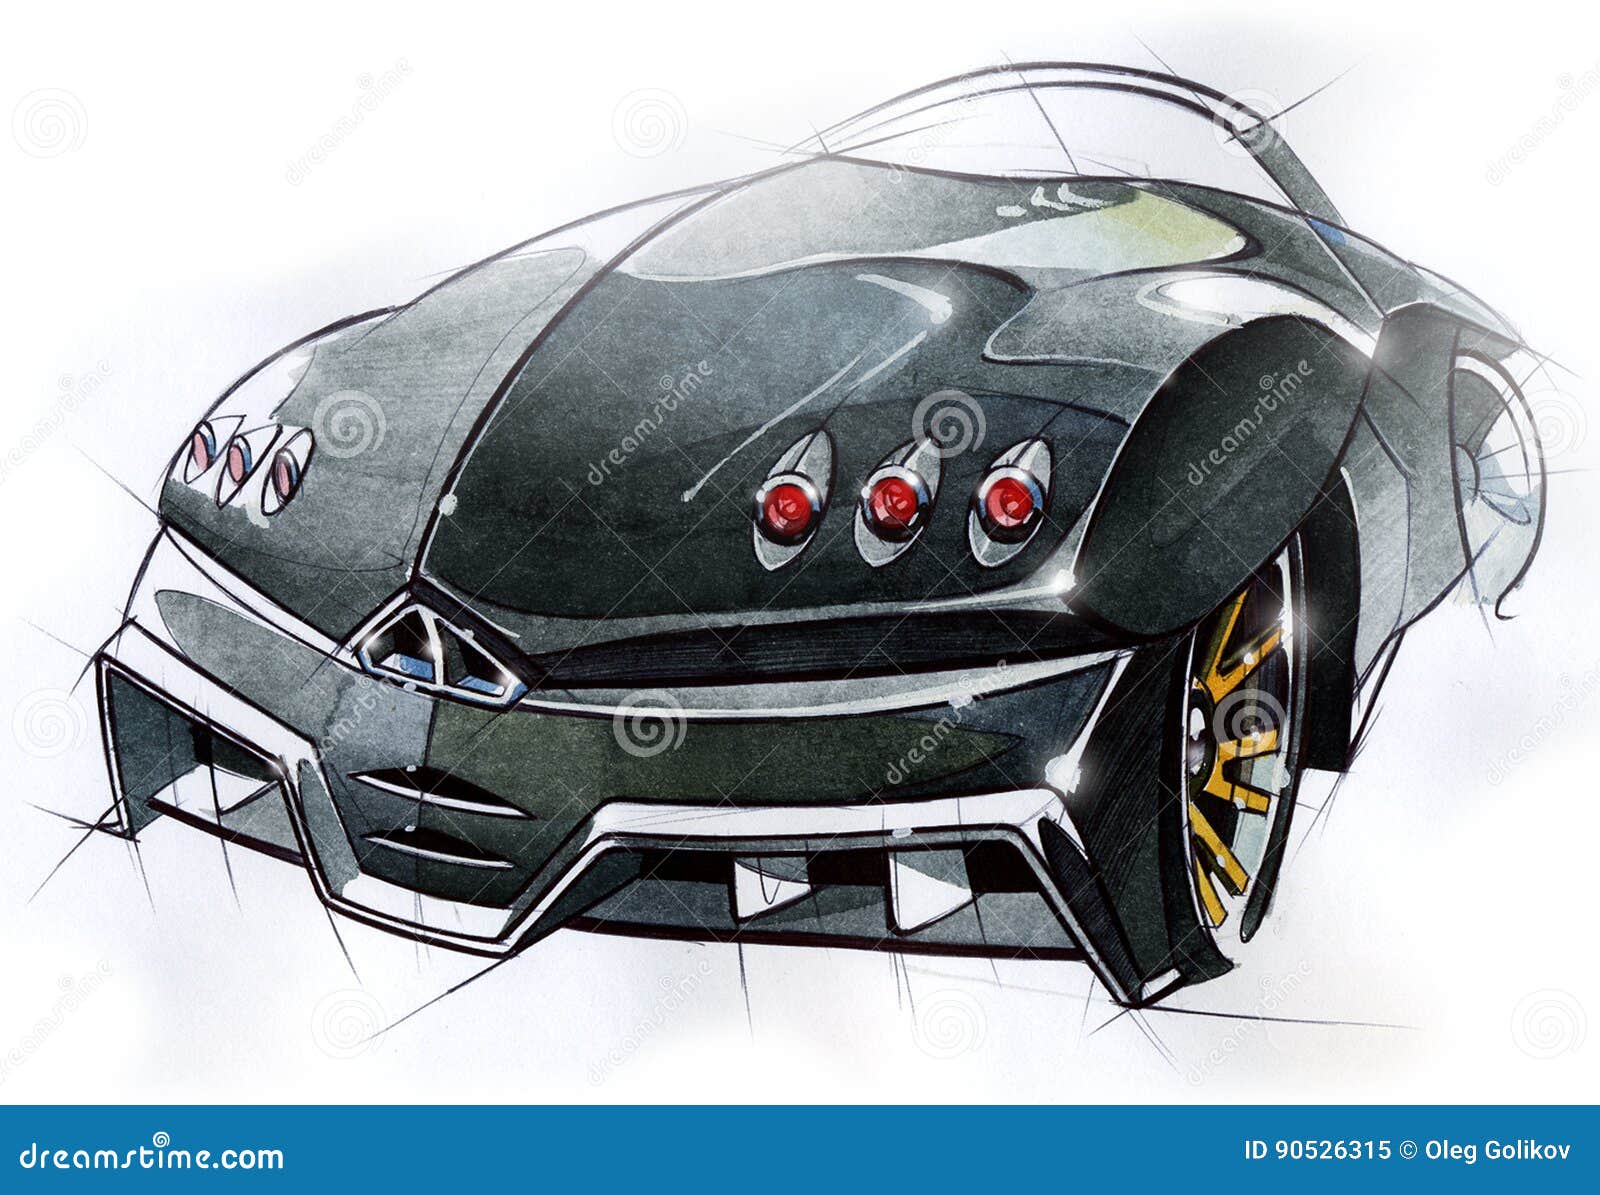 The Future Car | Diseno-art.com